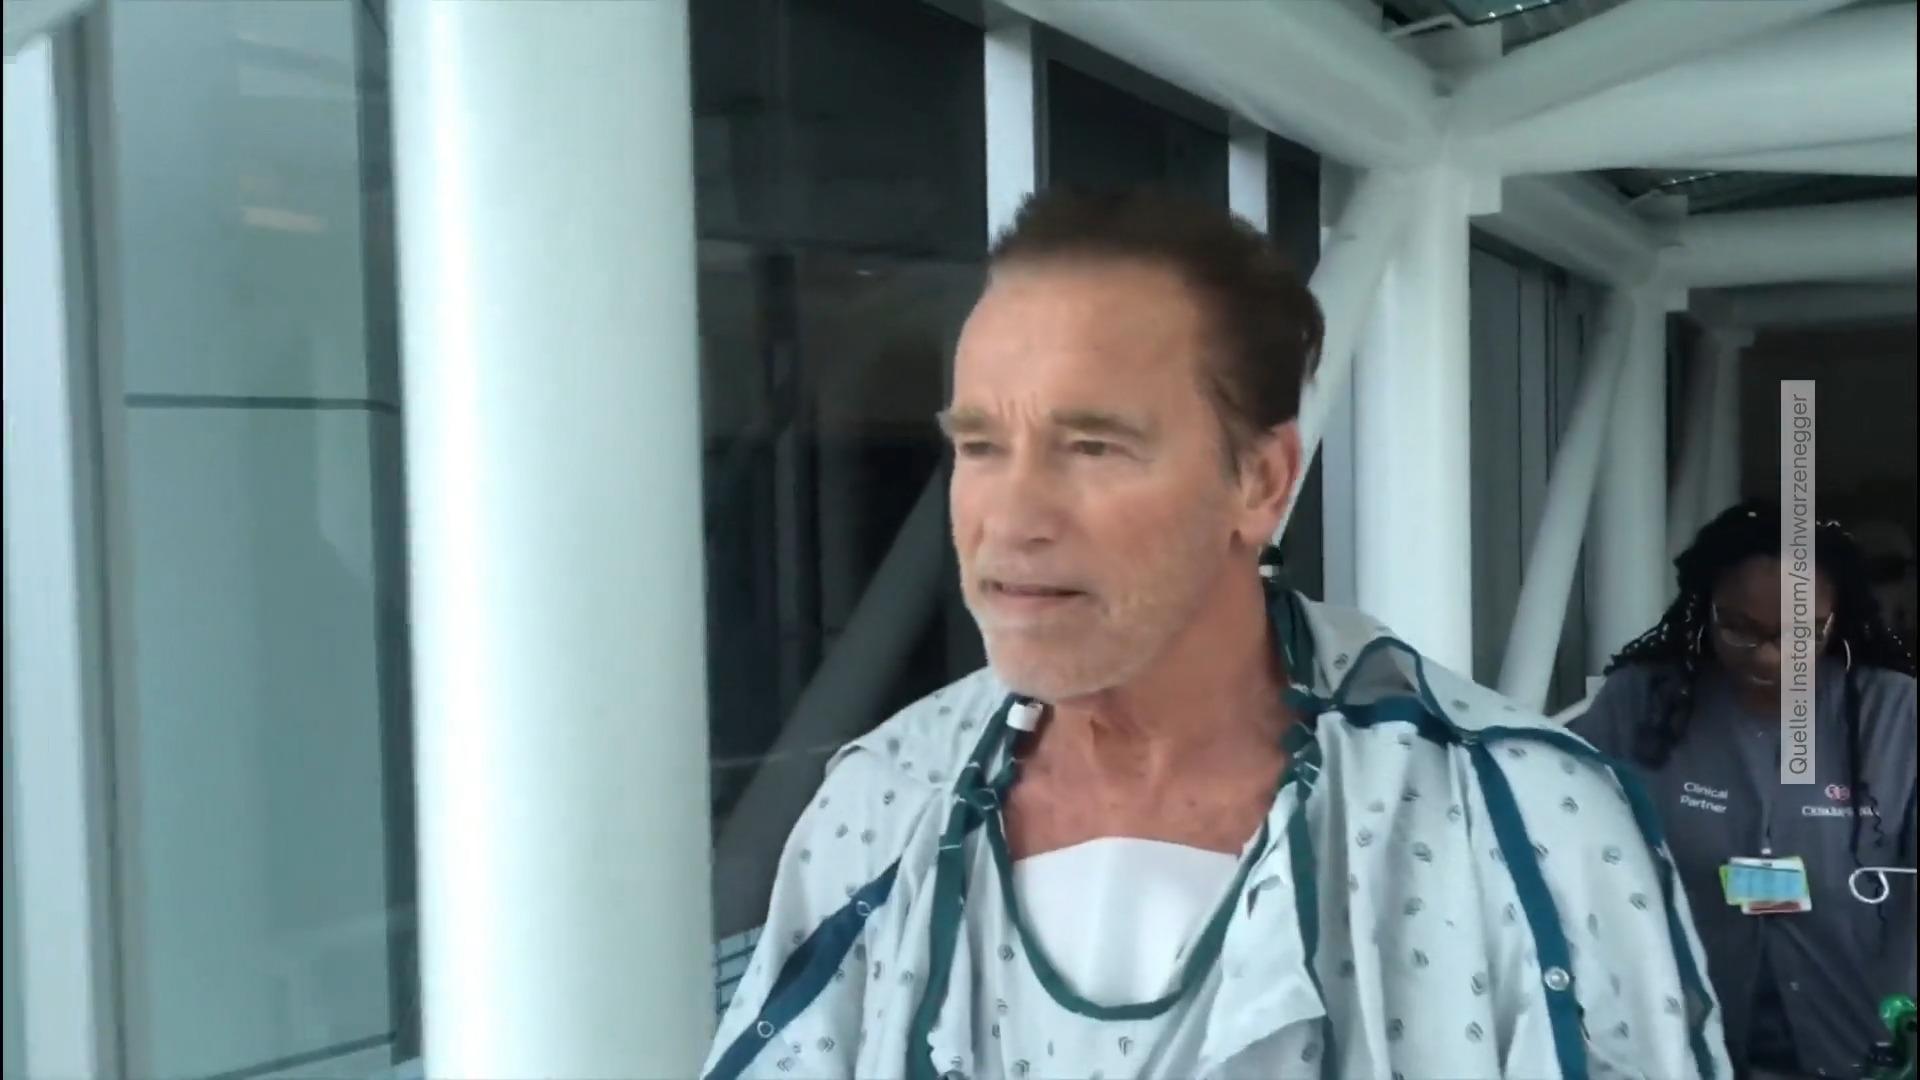 Arnold Schwarzenegger: "Wäre fast gestorben" Ärztefehler bei Herz-OP